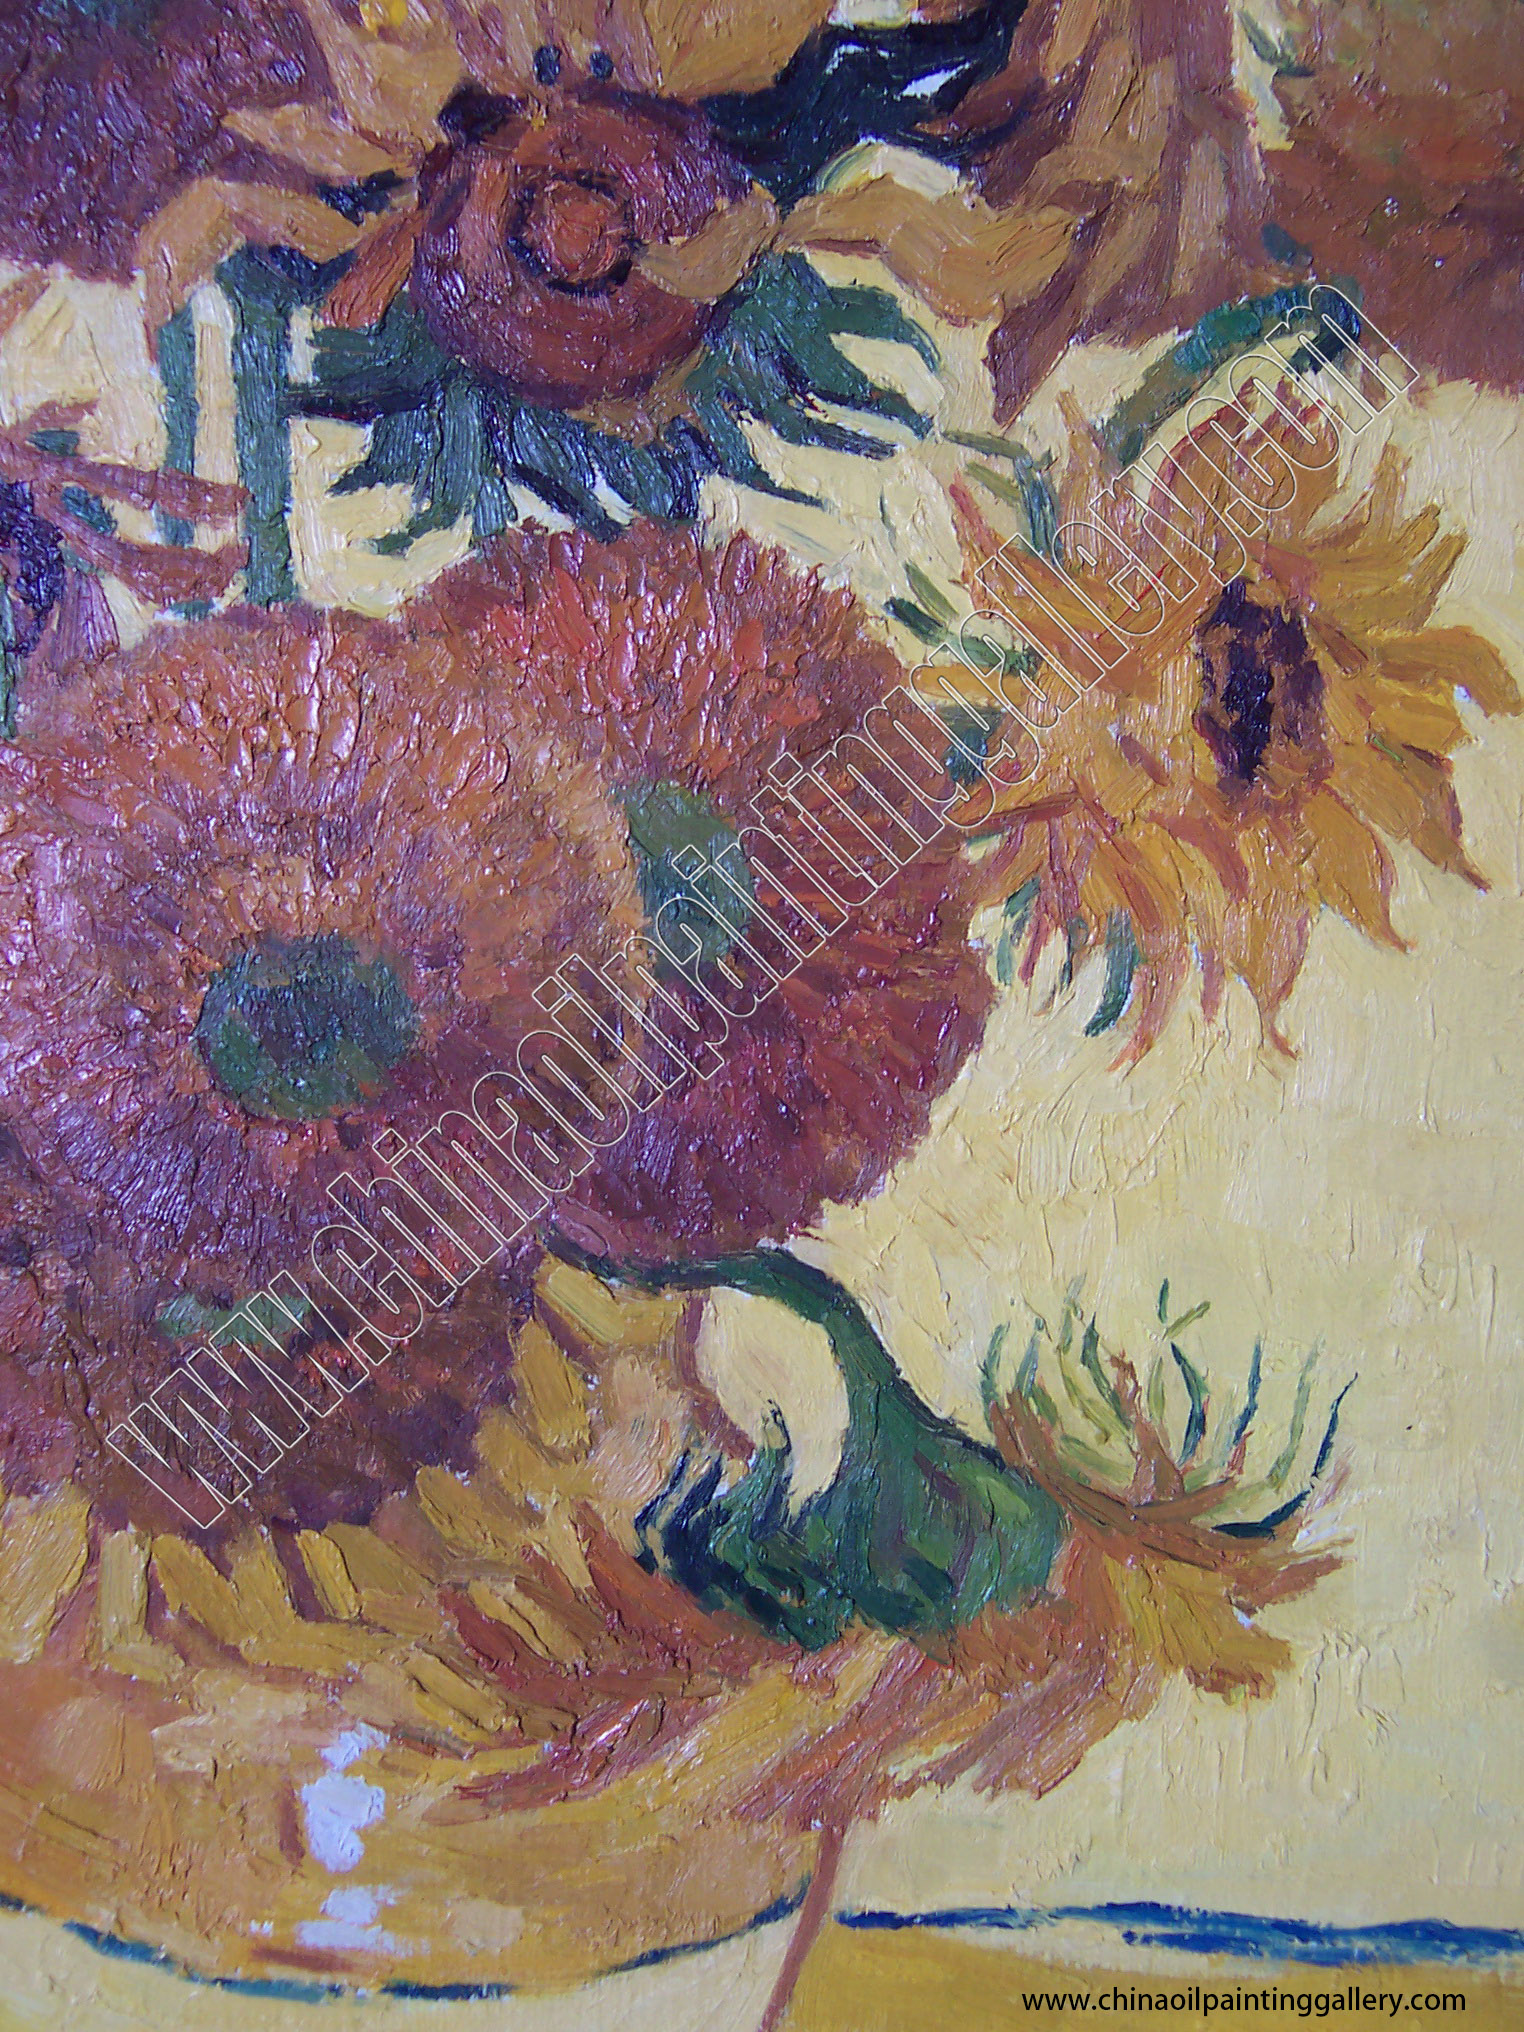 Vincent van Gogh Sunflowers - Oil painting reproductions details 2